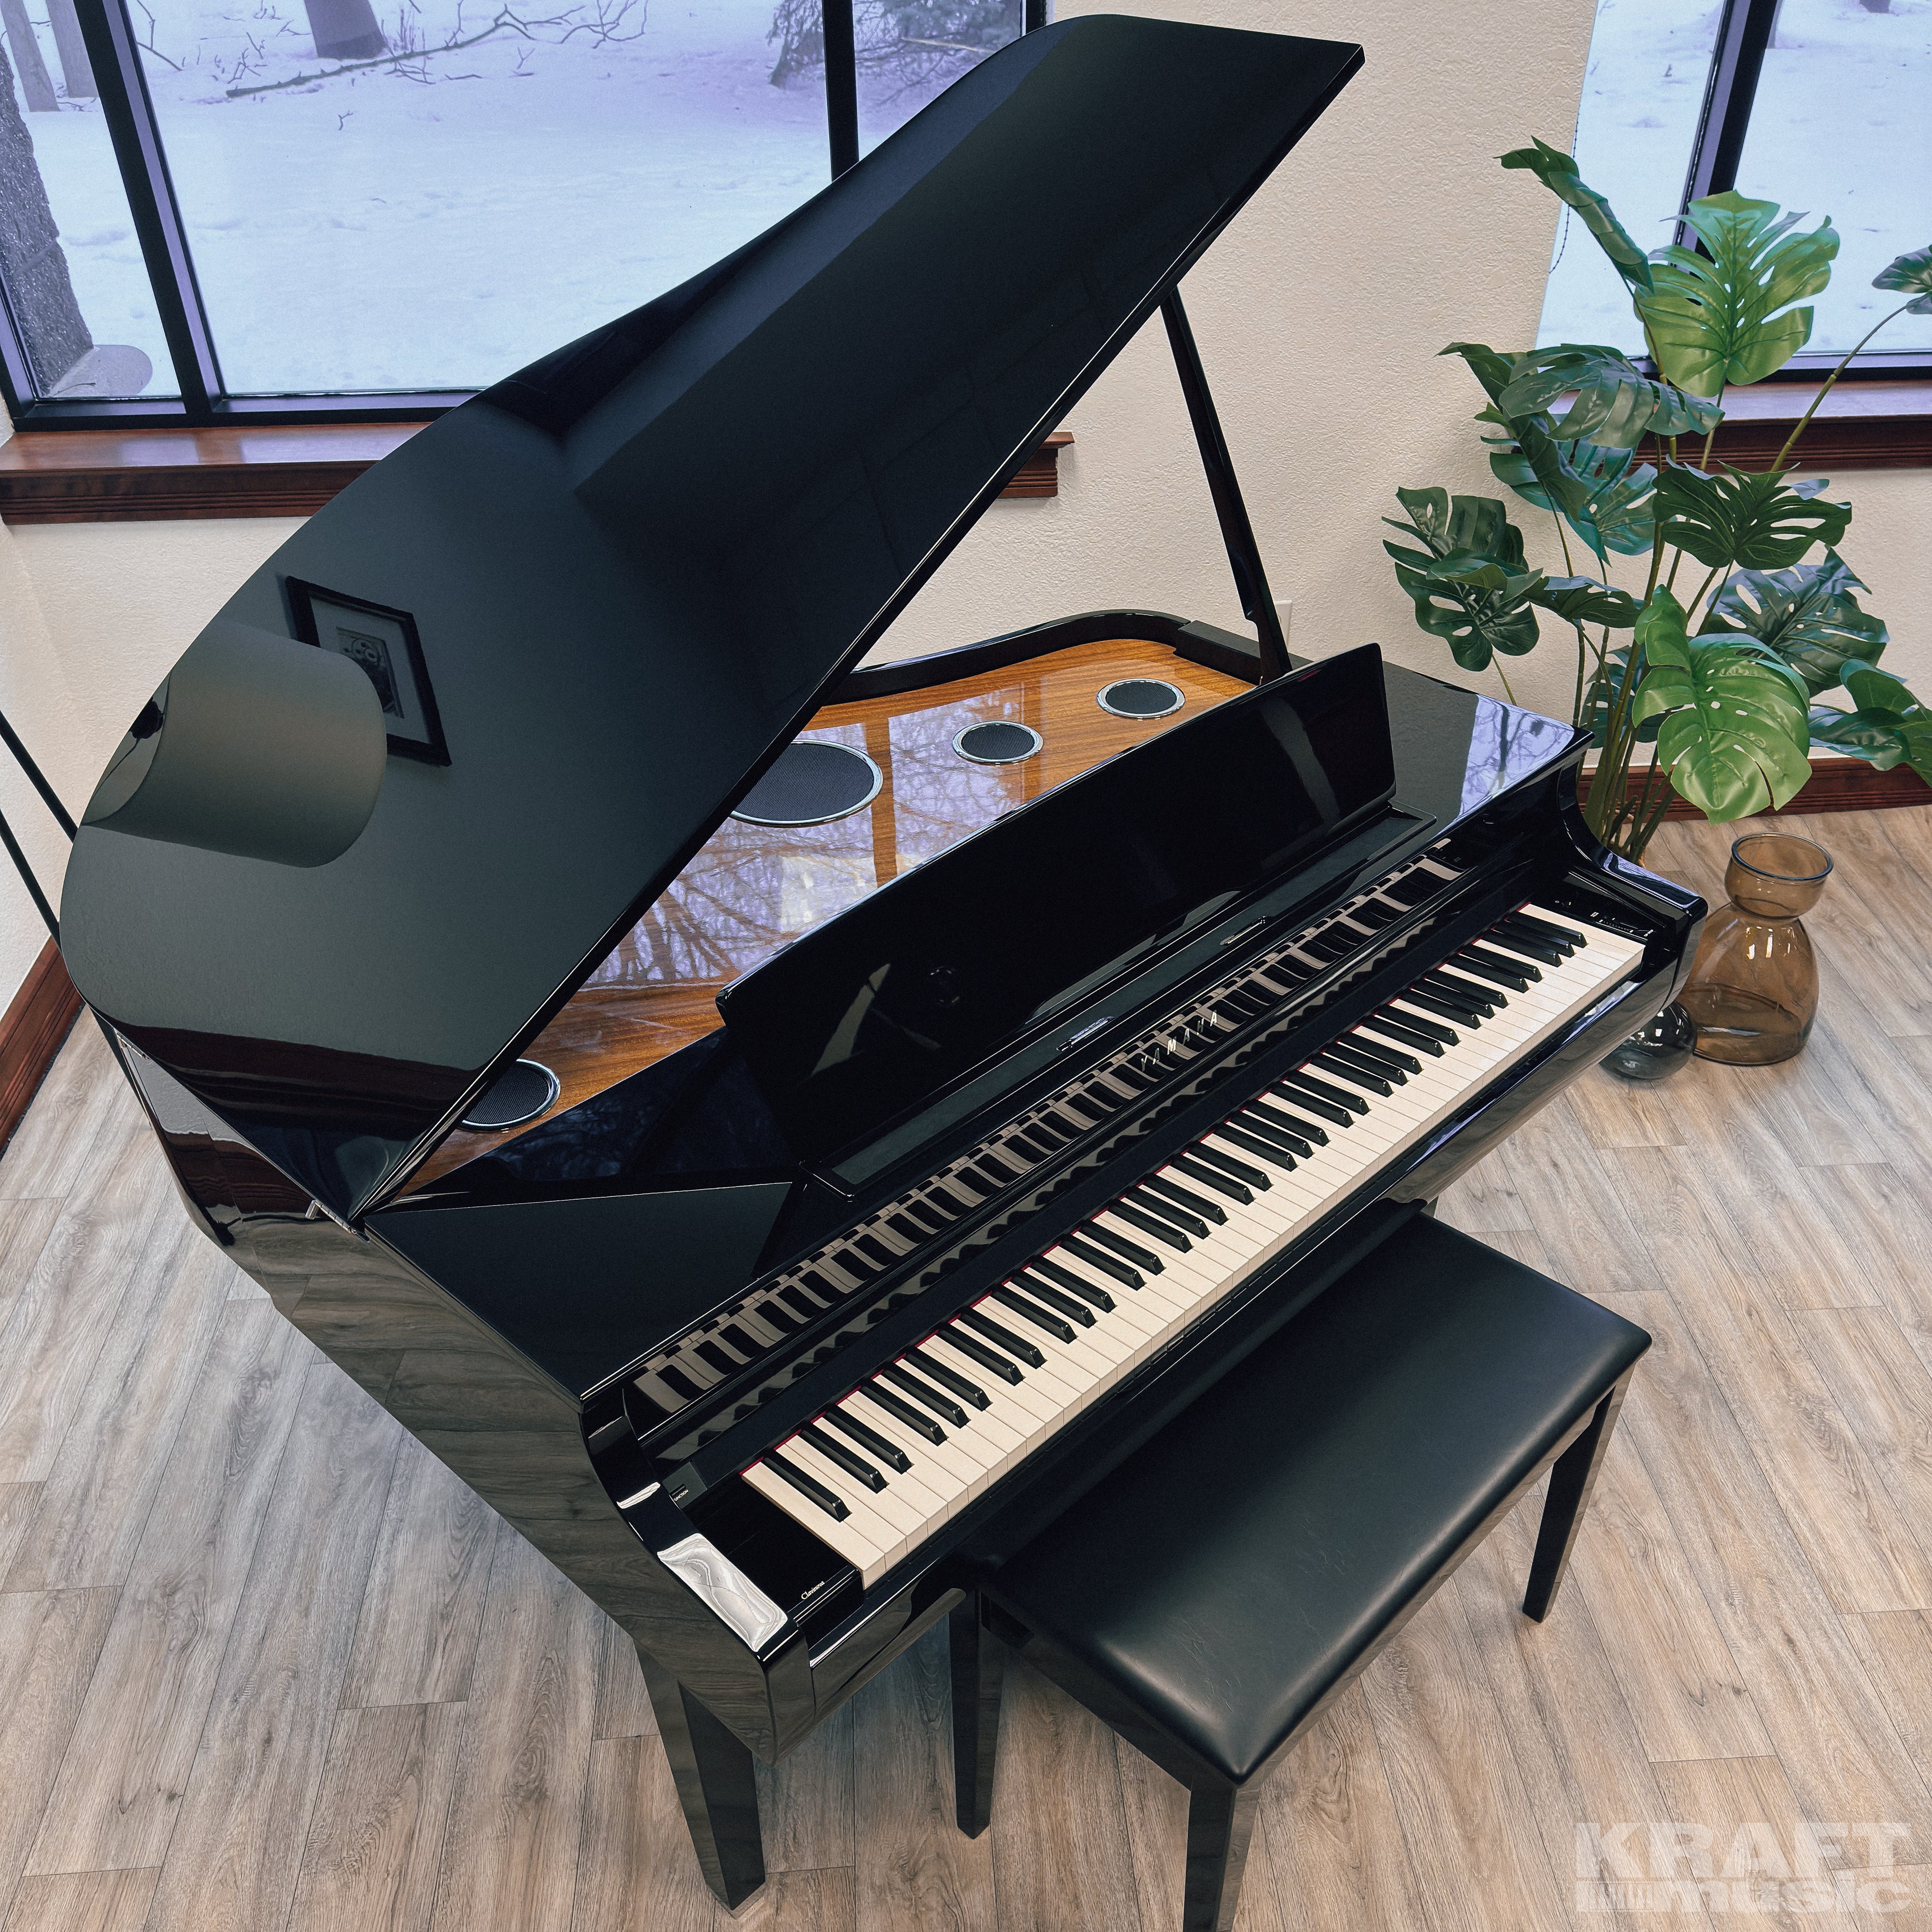 Yamaha Clavinova CSP-295GP Digital Grand Piano - Polished Ebony - in a stylish music room from above